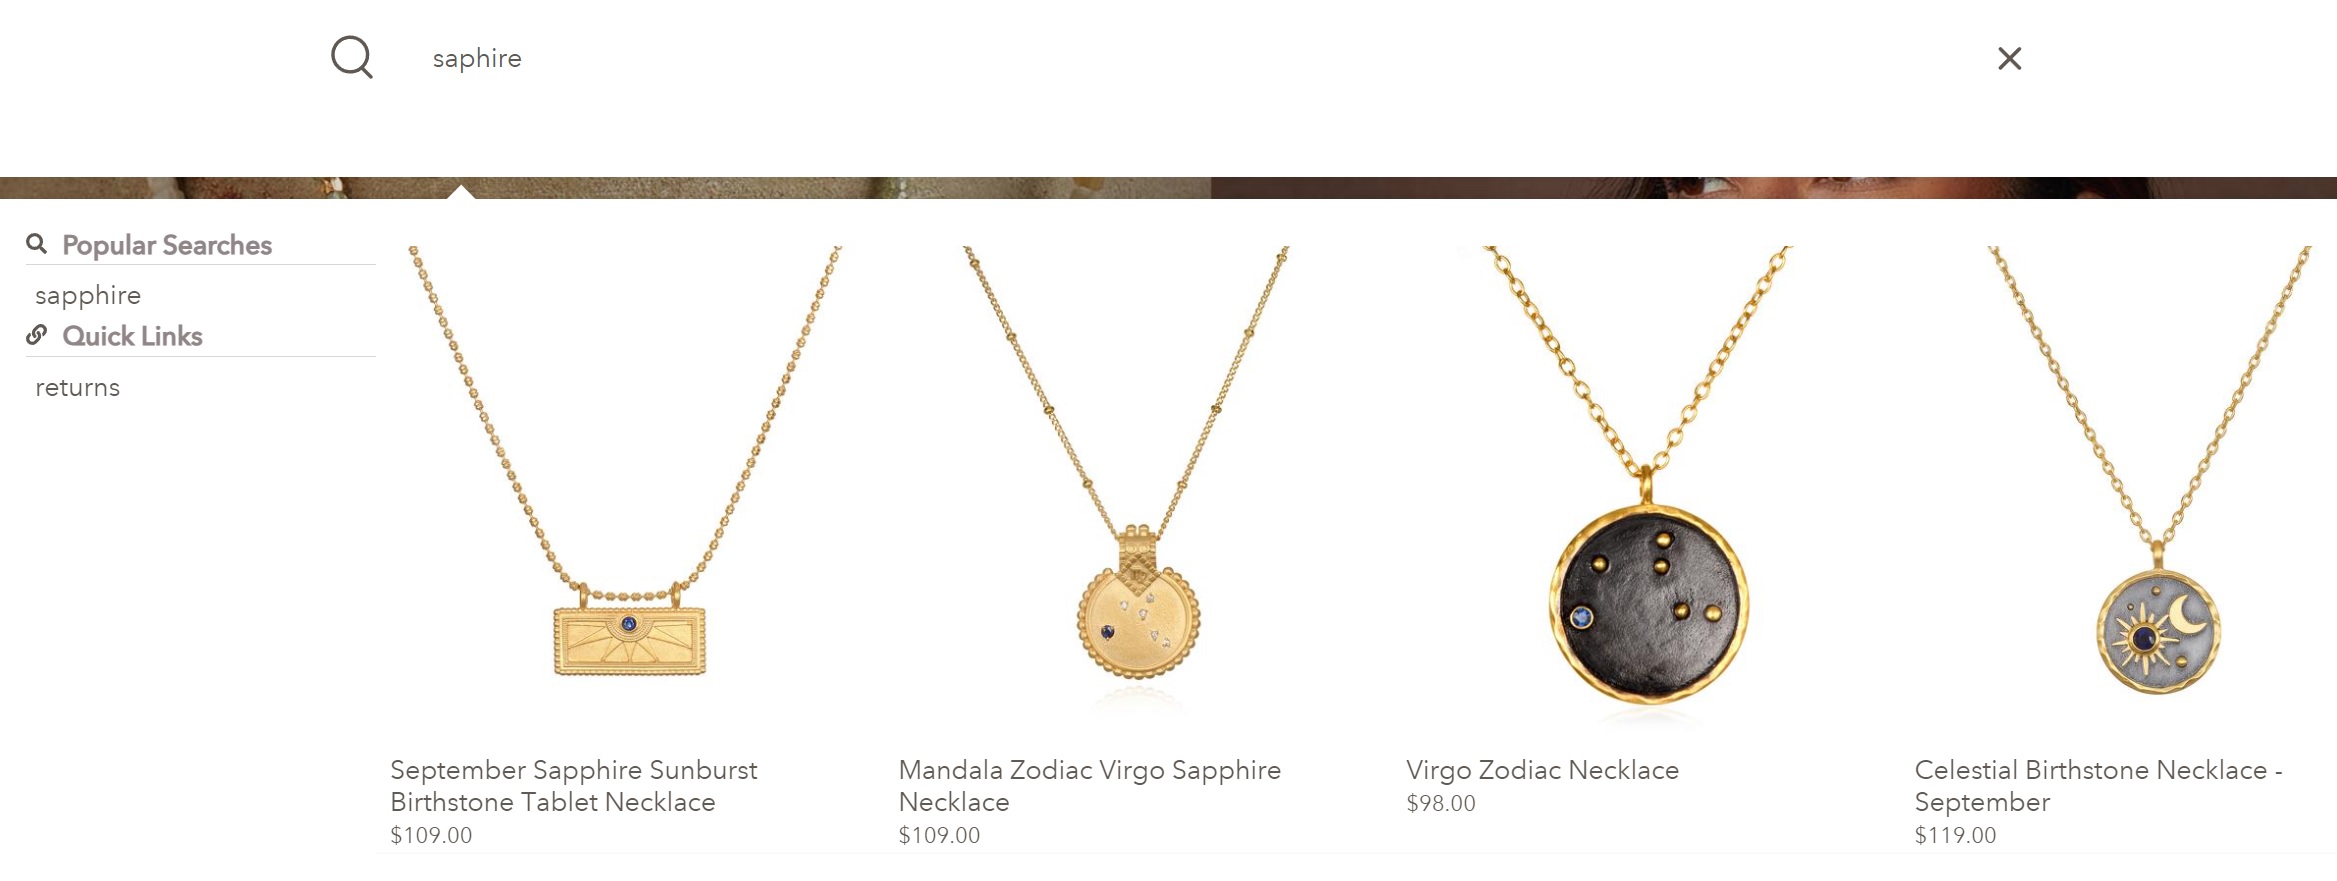 a screen shot of a jewelry store website